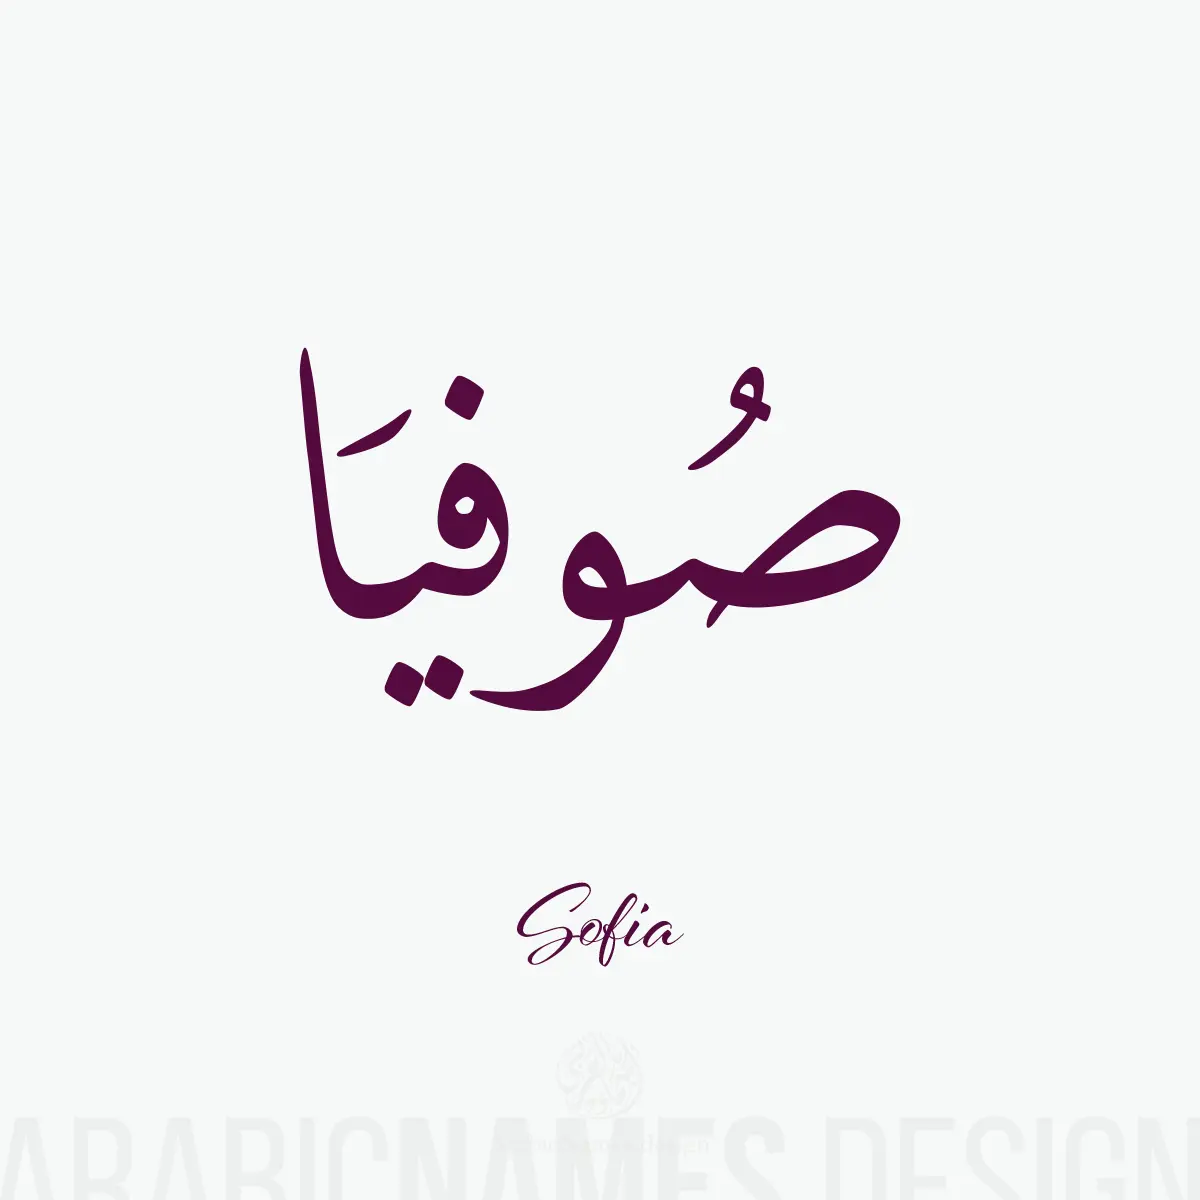 Sofia صوفيا Sofia name with Arabic Calligraphy Naskh style.  اسم صوفيا بخط النسخ 